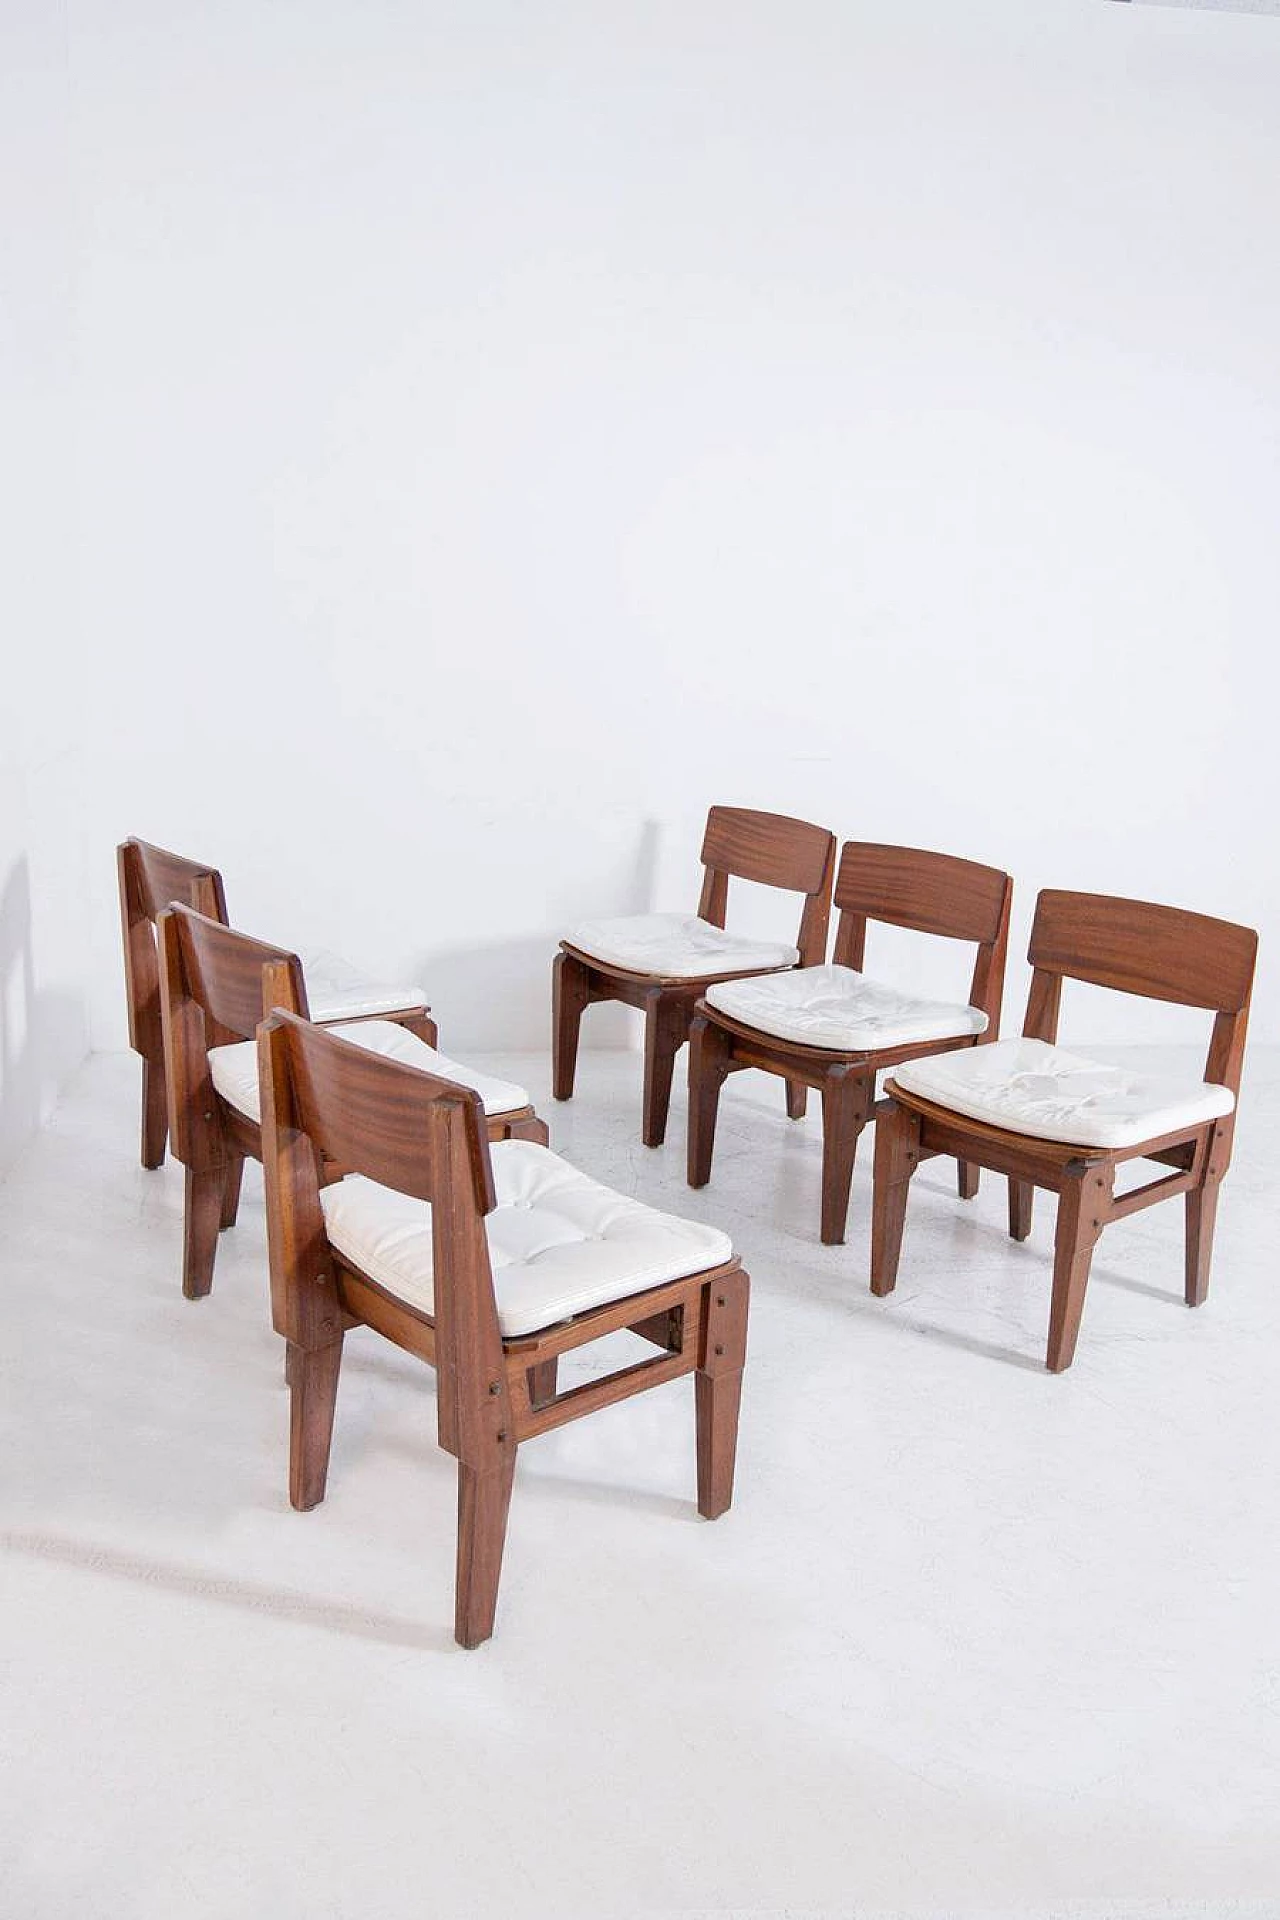 6 Chairs in mahogany and fabric by Vito Sangiradi for Pallante store Bari, 50s 1312287